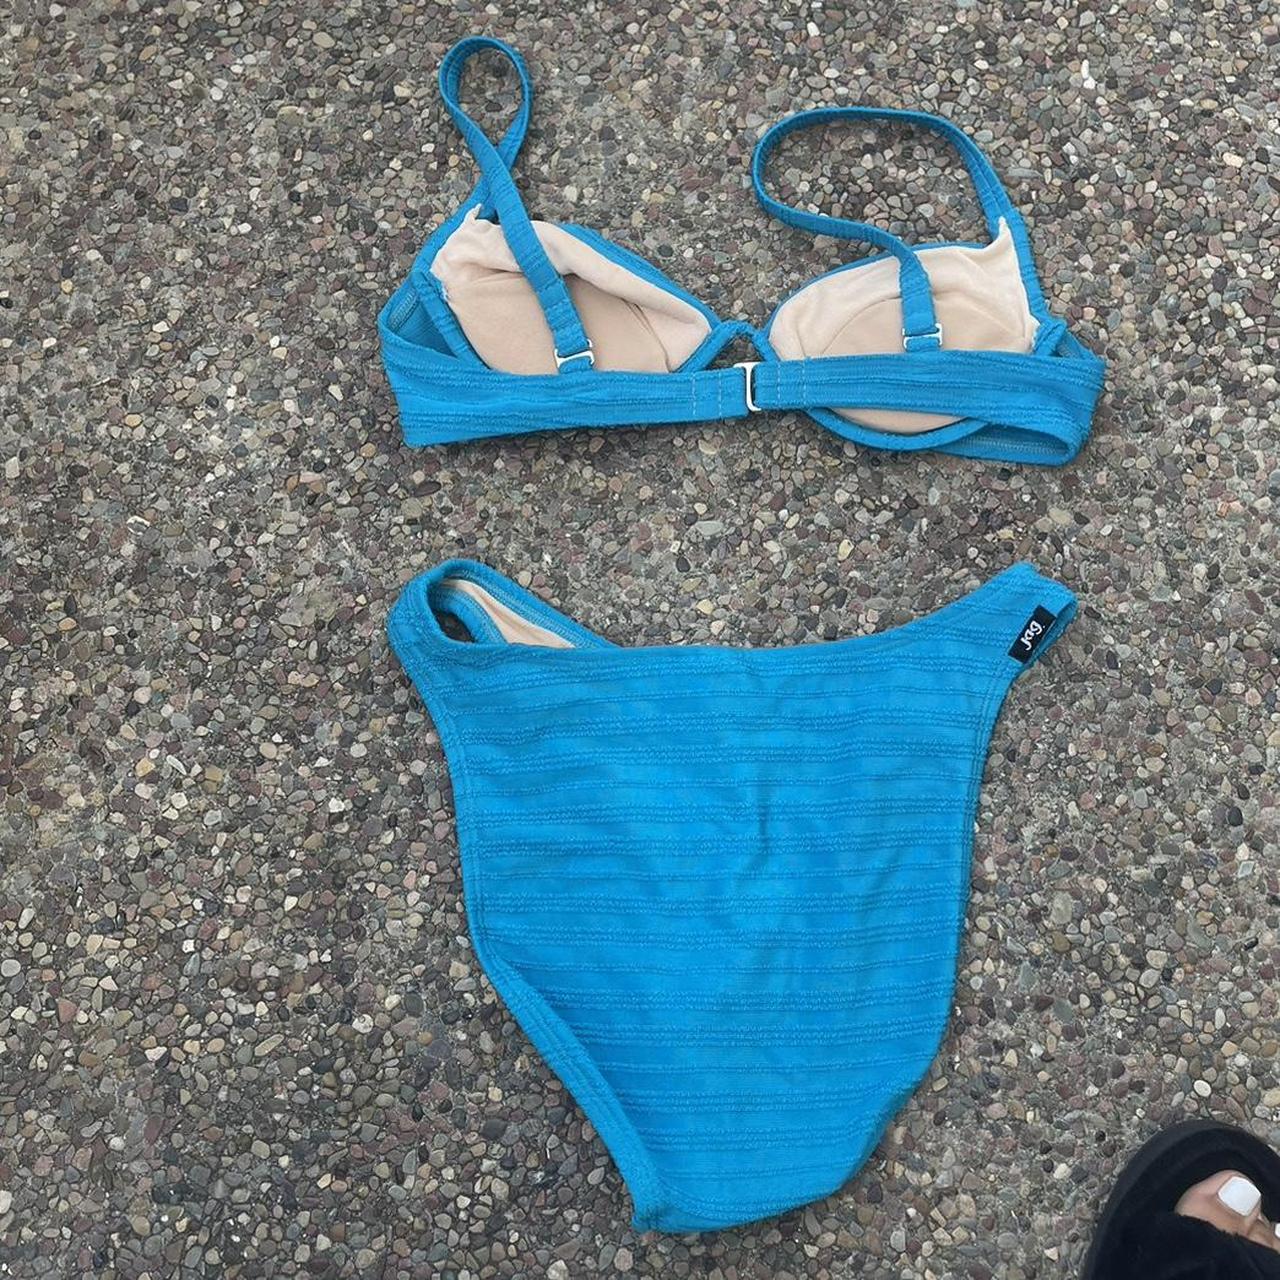 JAG Women's Blue Bikinis-and-tankini-sets (3)